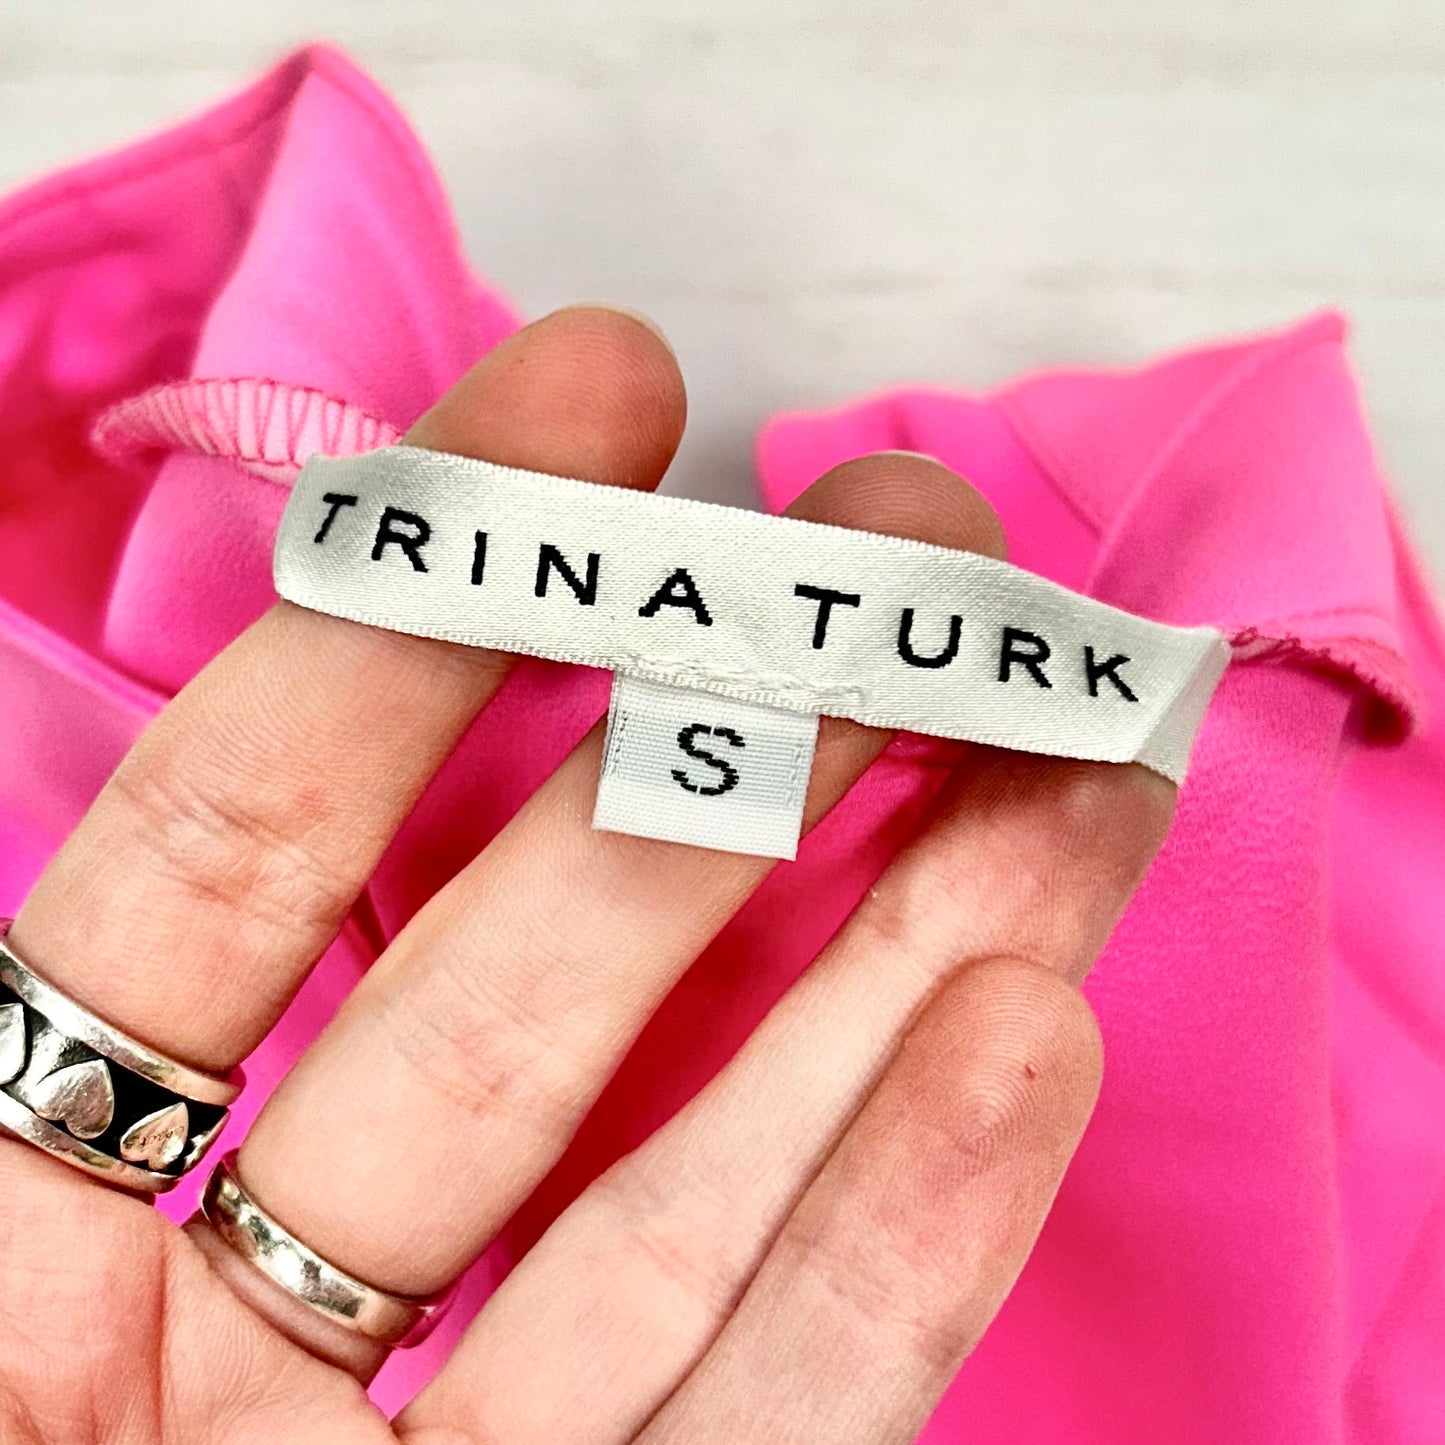 Pink Top Sleeveless Designer By Trina Turk, Size: S